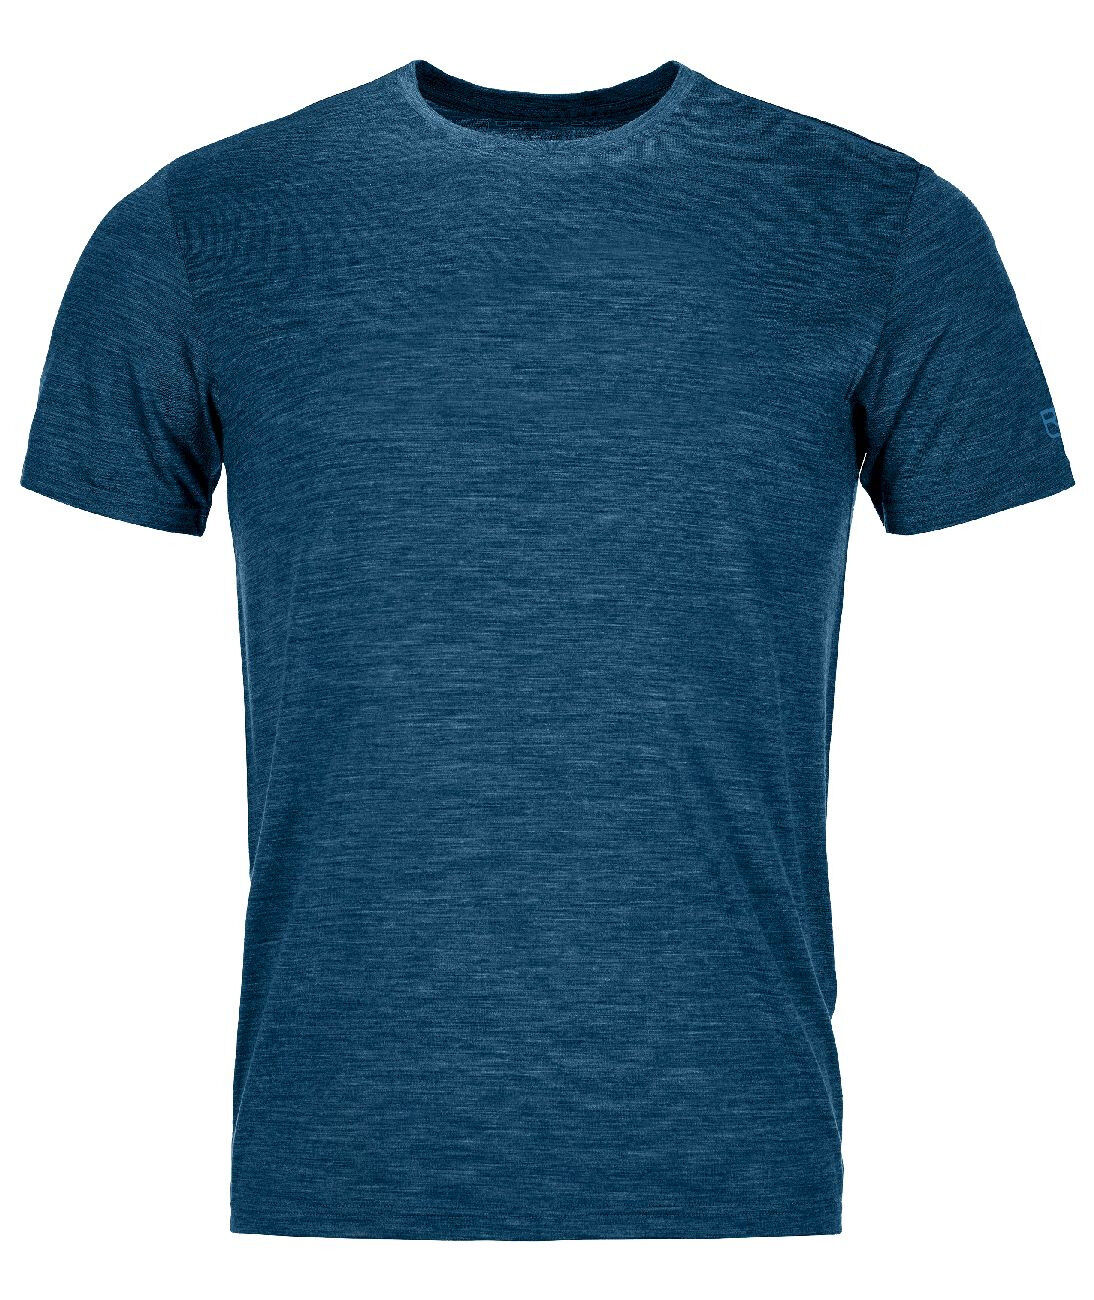 Ortovox 150 Cool Clean TS - Camiseta - Hombre